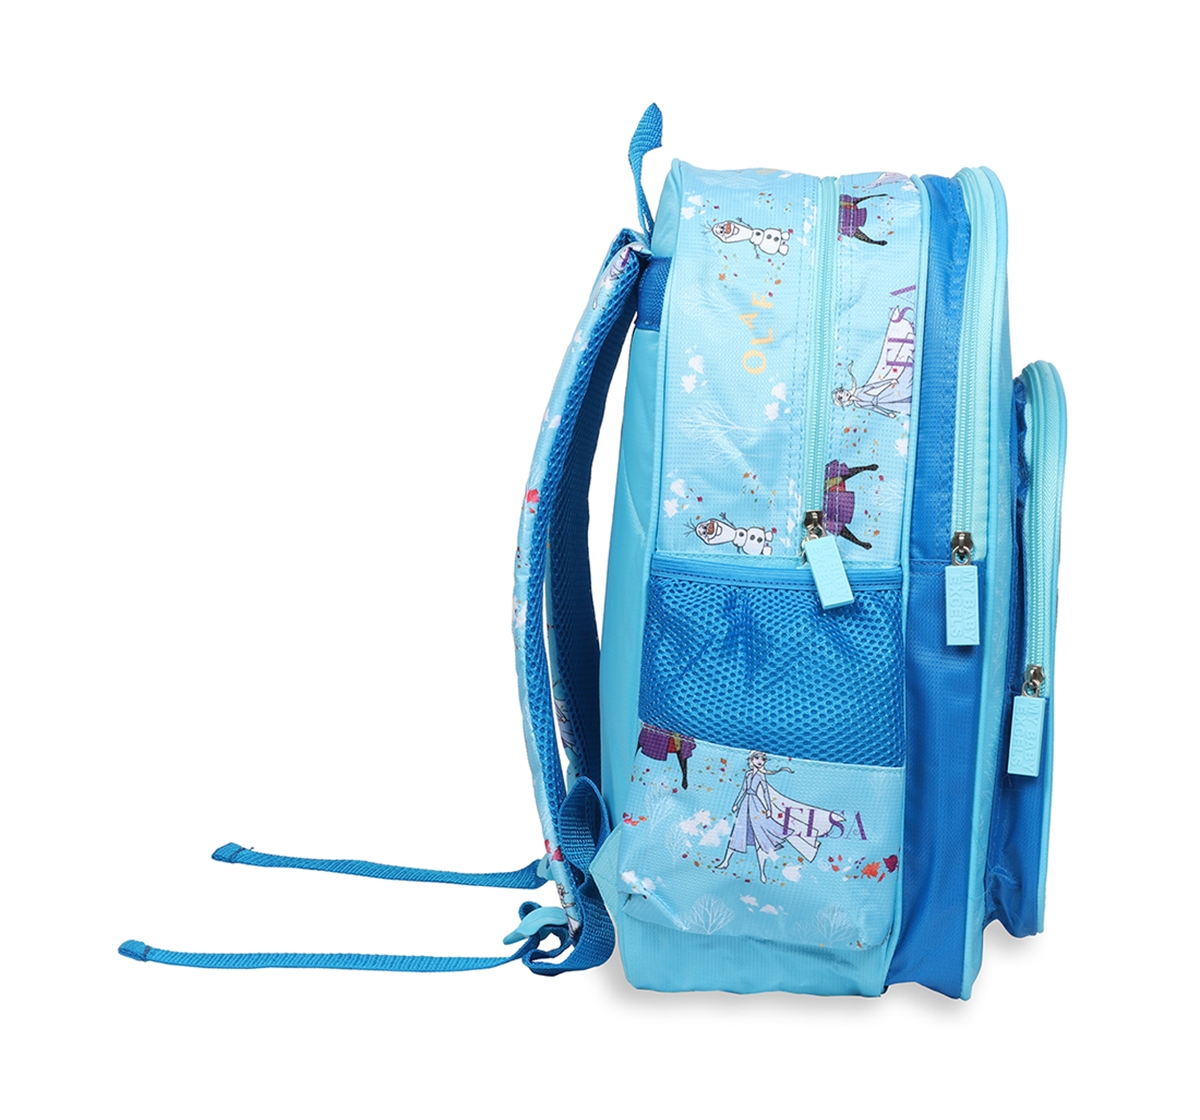 DISNEY | Disney Frozen2 Trust Your Journey School Bag 41 Cm Bags for Girls age 7Y+ (Blue) 3